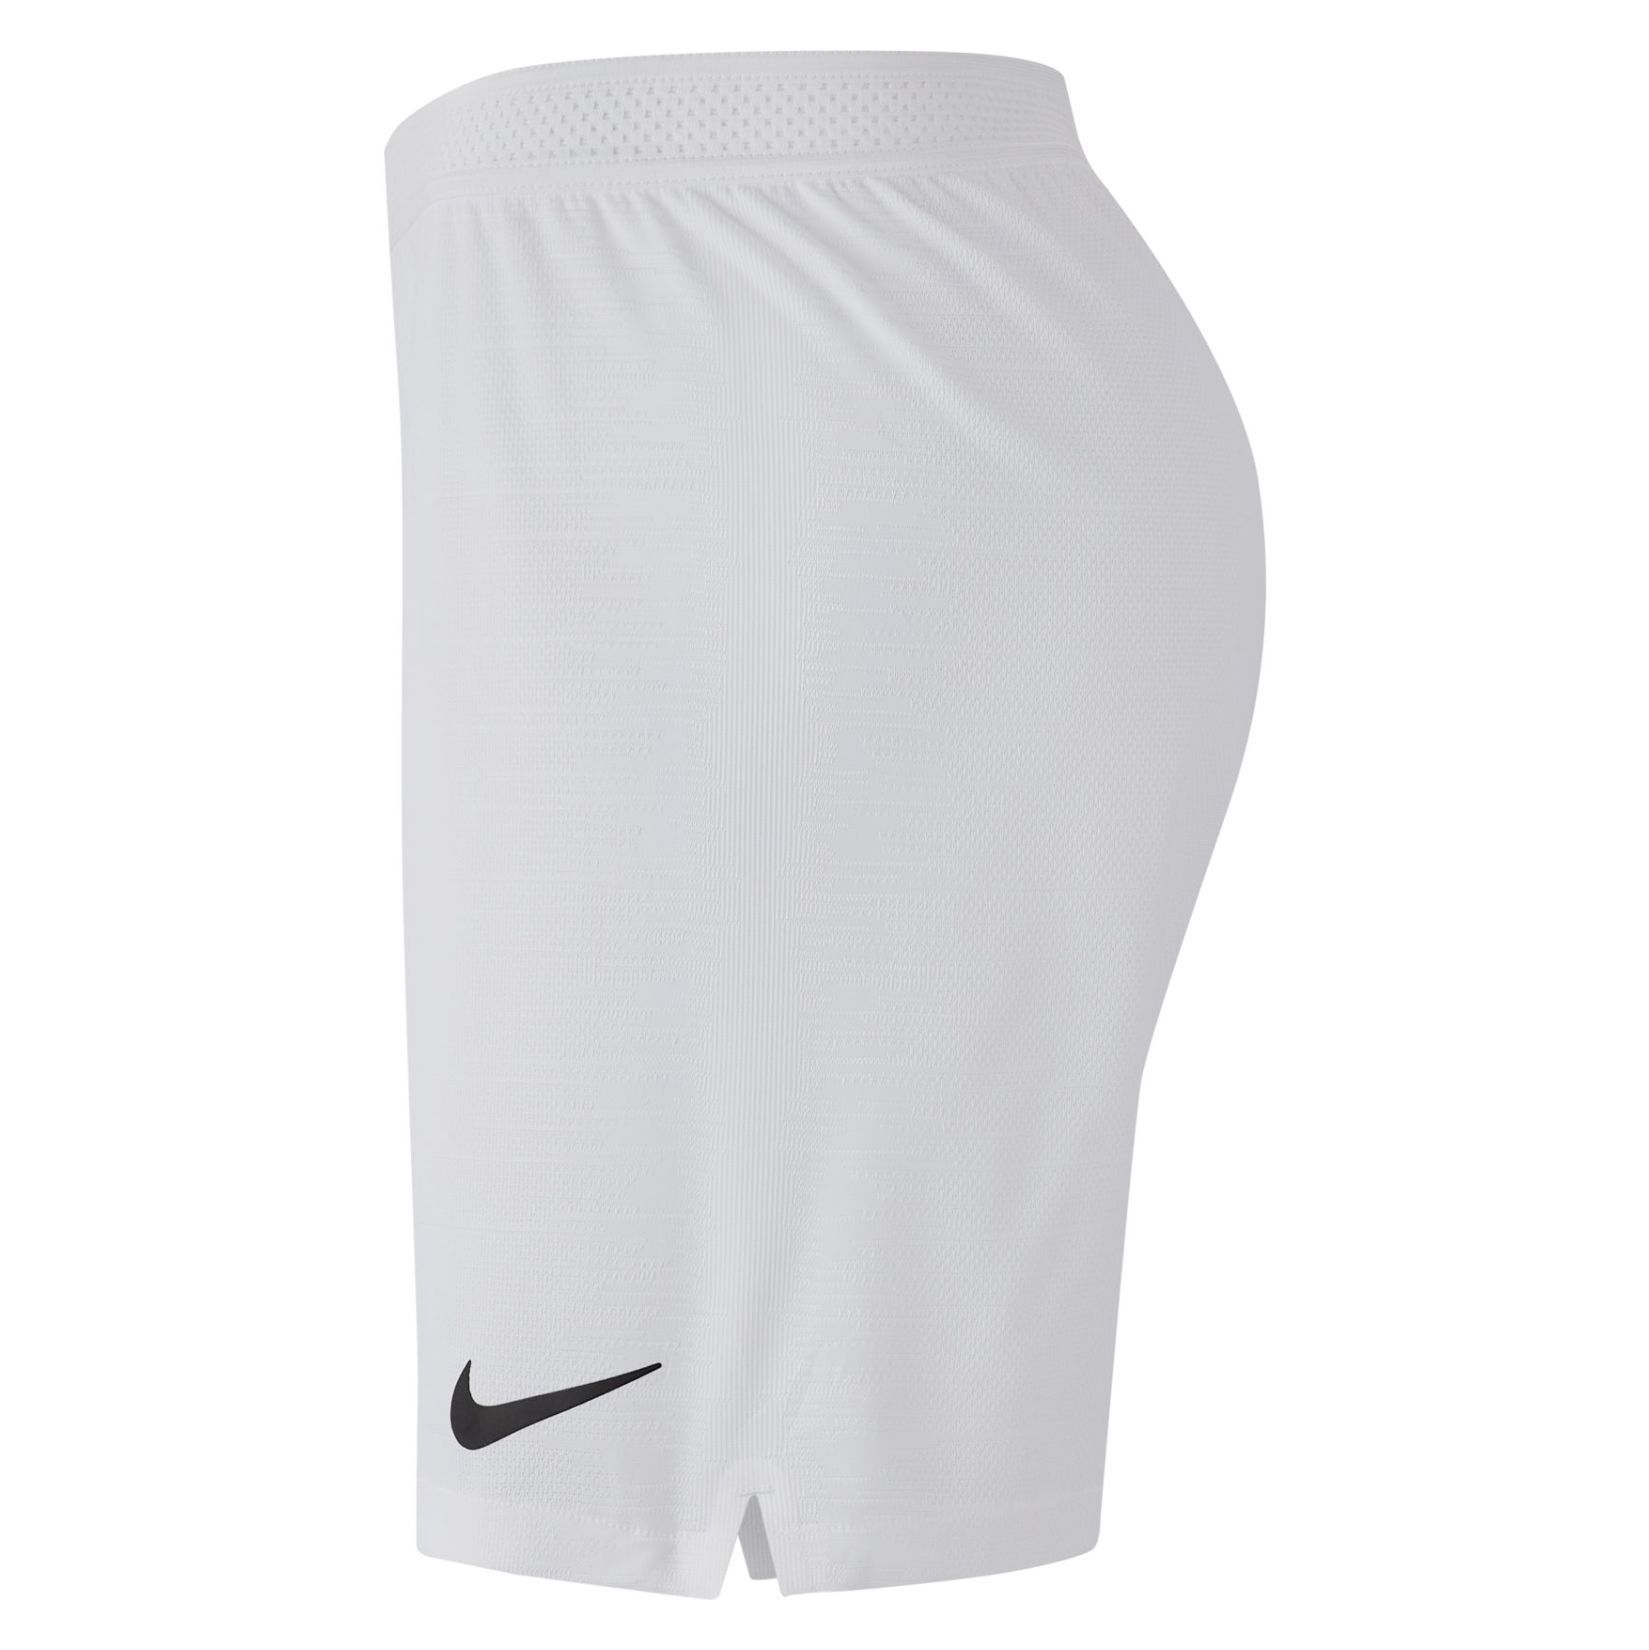 Nike Vapor Knit II Shorts - Kitlocker.com